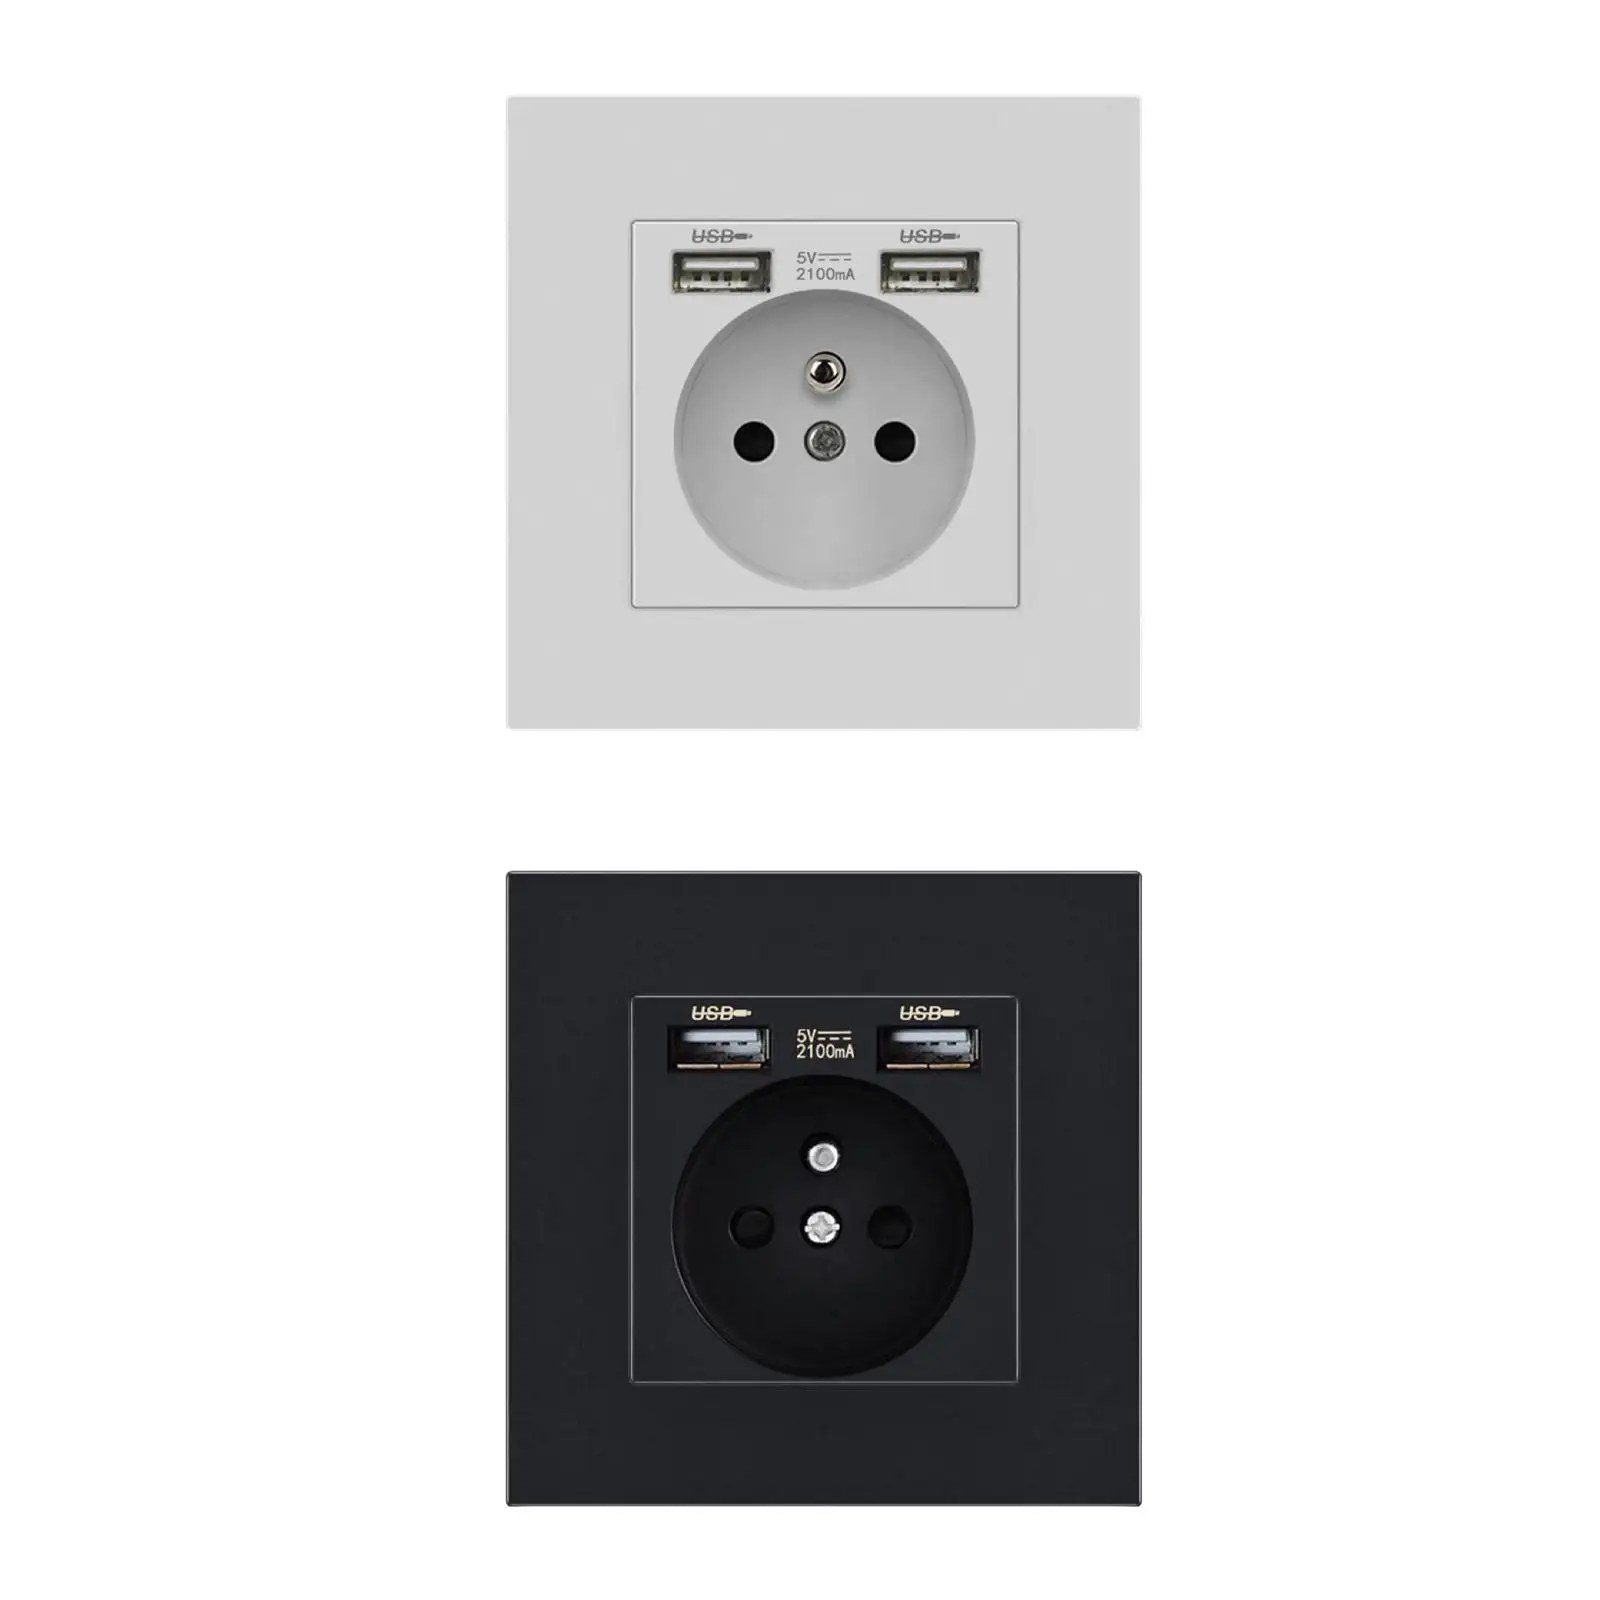 Power Socket Dual USB Plug Charging Port Socket Electrical Socket for Home Office Household Appliances